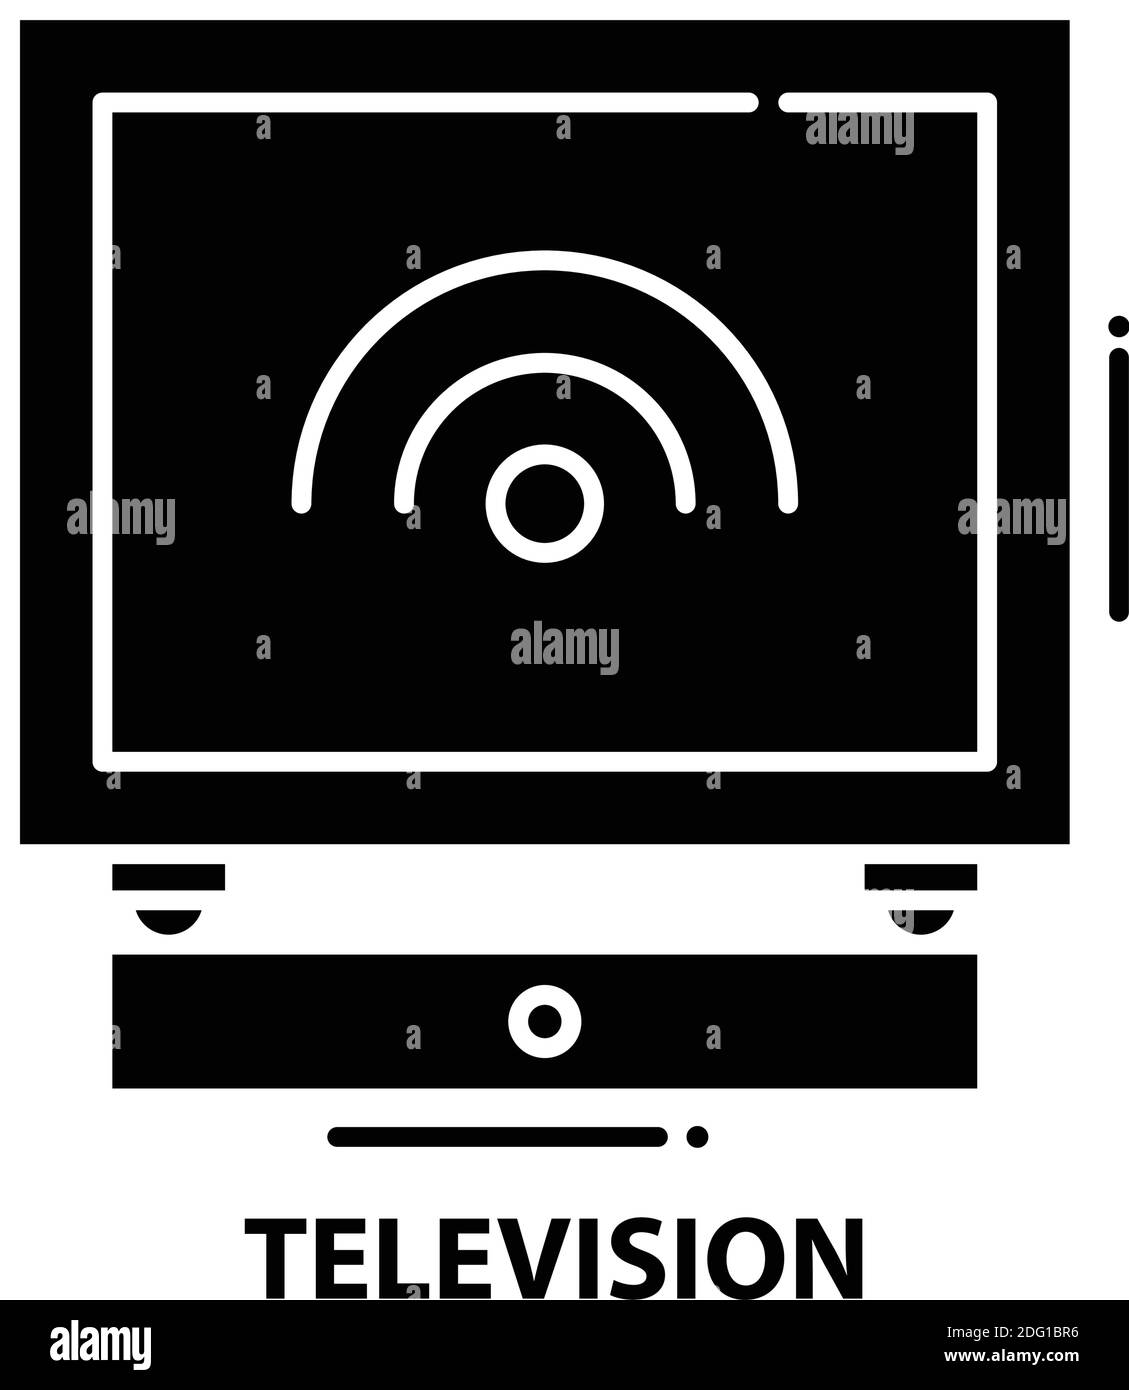 television symbol icon, black vector sign with editable strokes, concept illustration Stock Vector